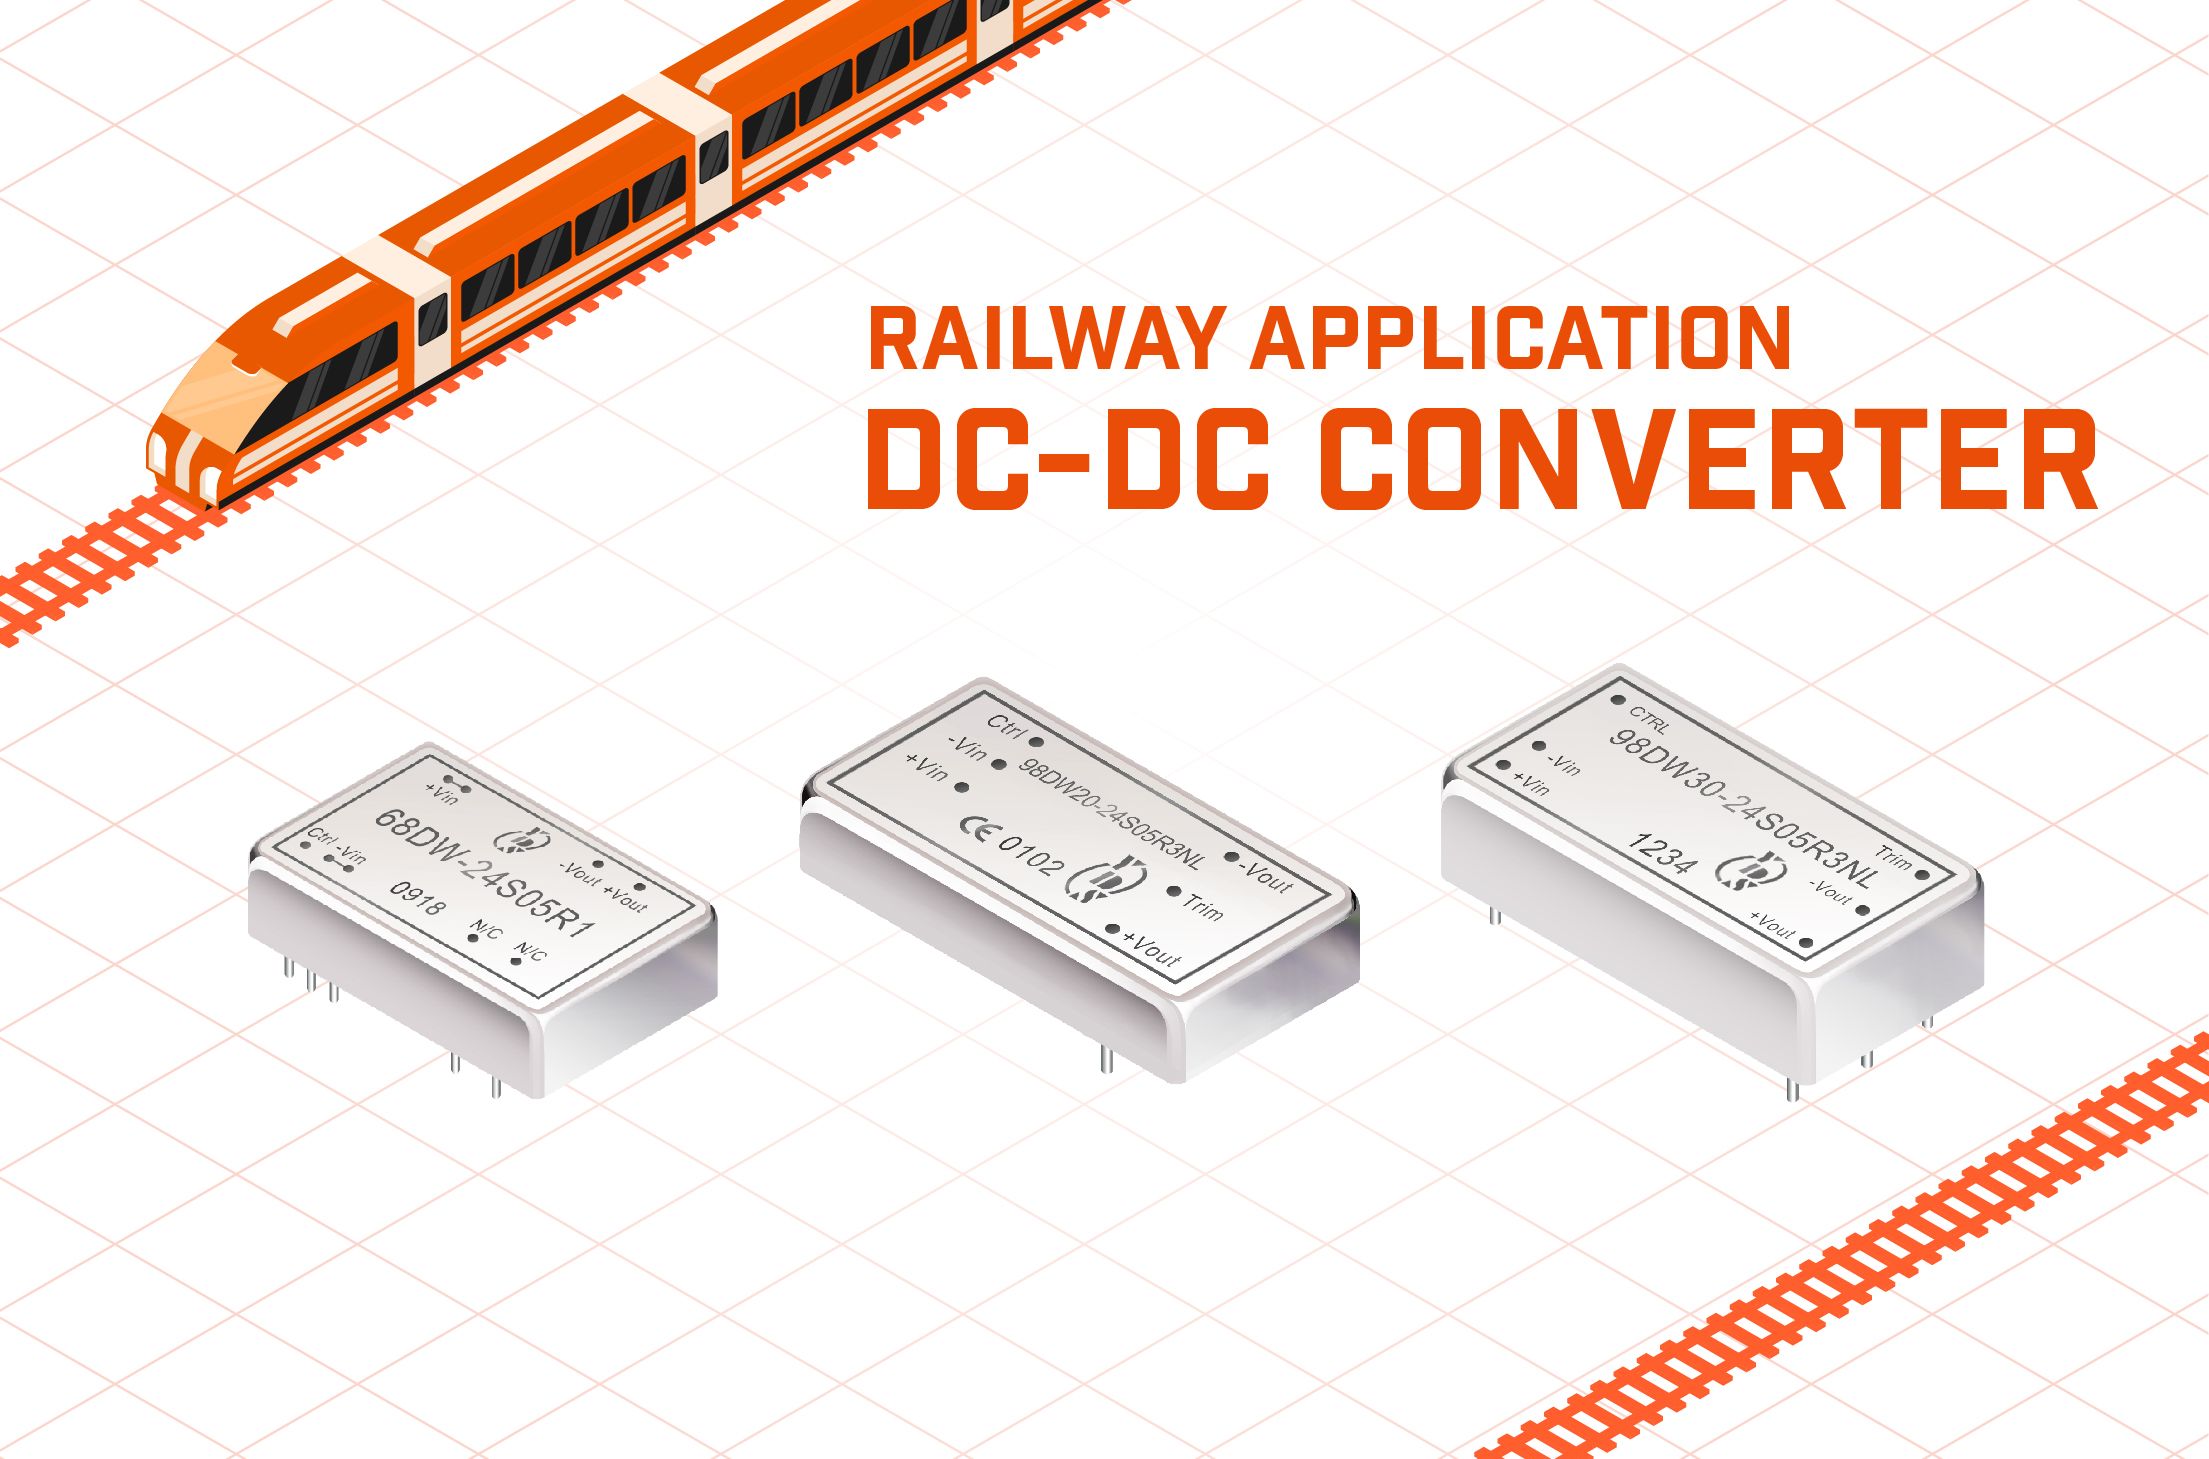 Convertitore DC-DC per Applicazioni Ferroviarie